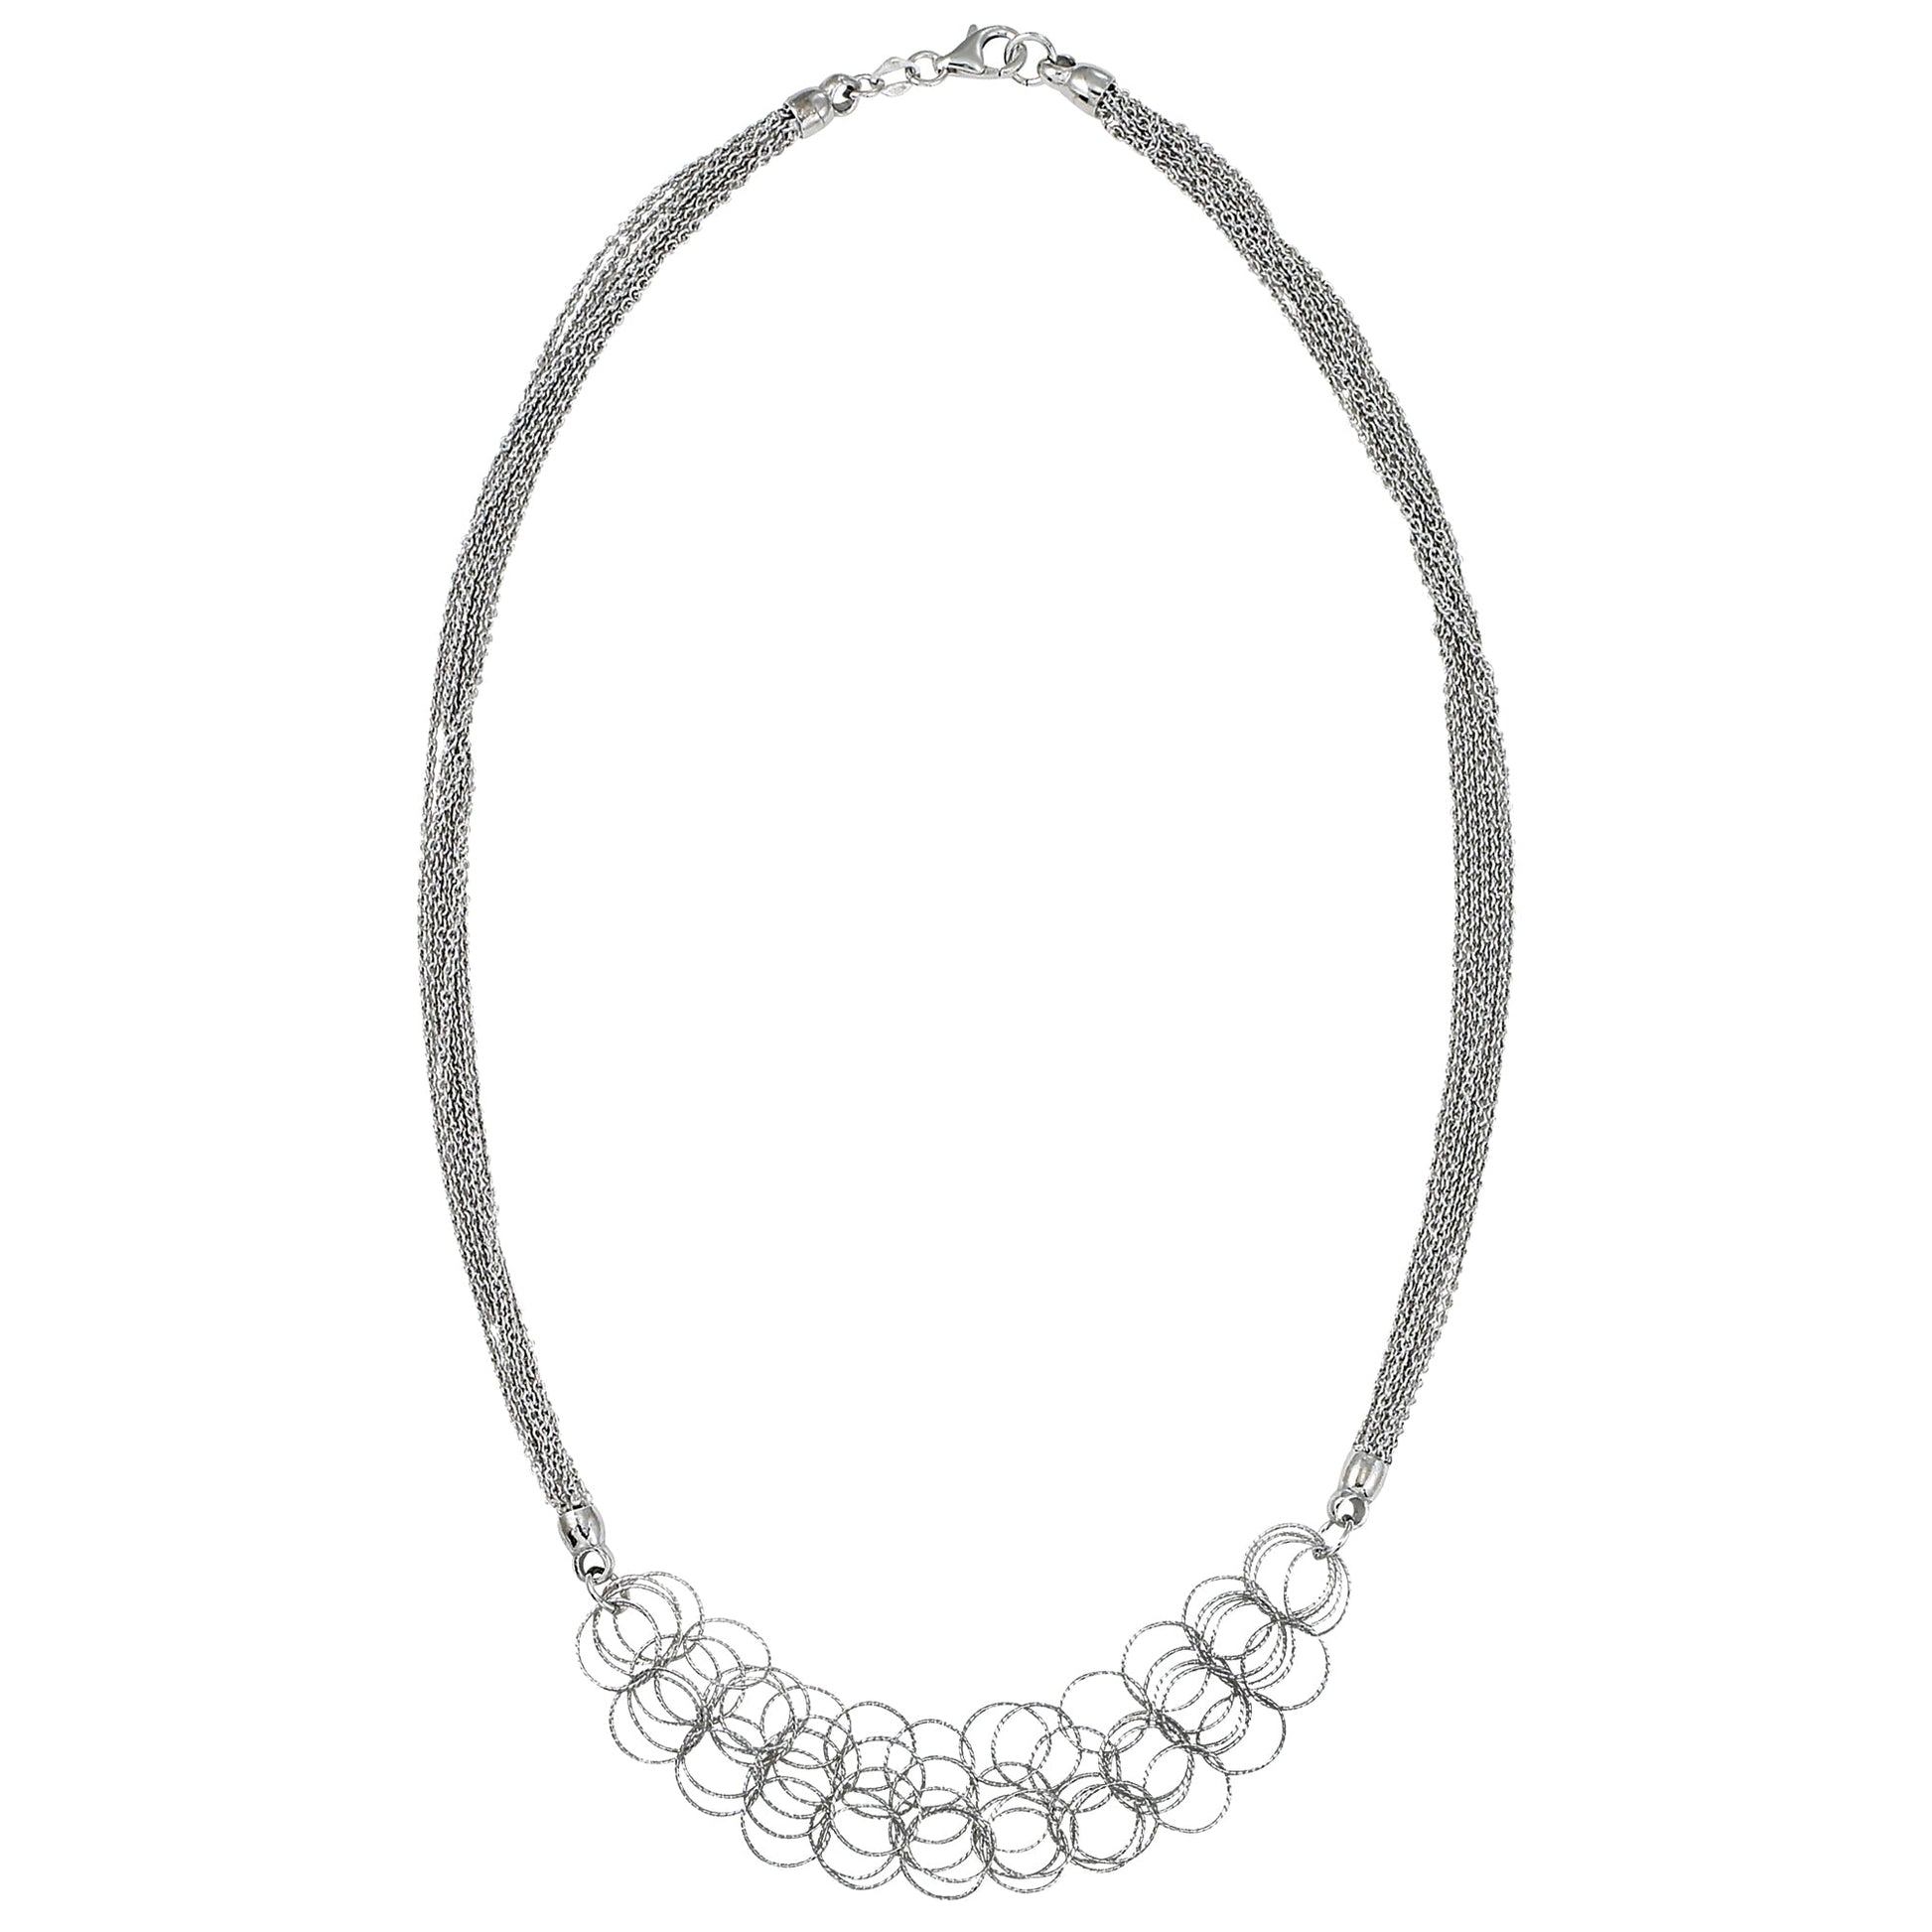 Franco Stellari Italian Sterling Silver Circle Links Multistrand Necklace, 20"